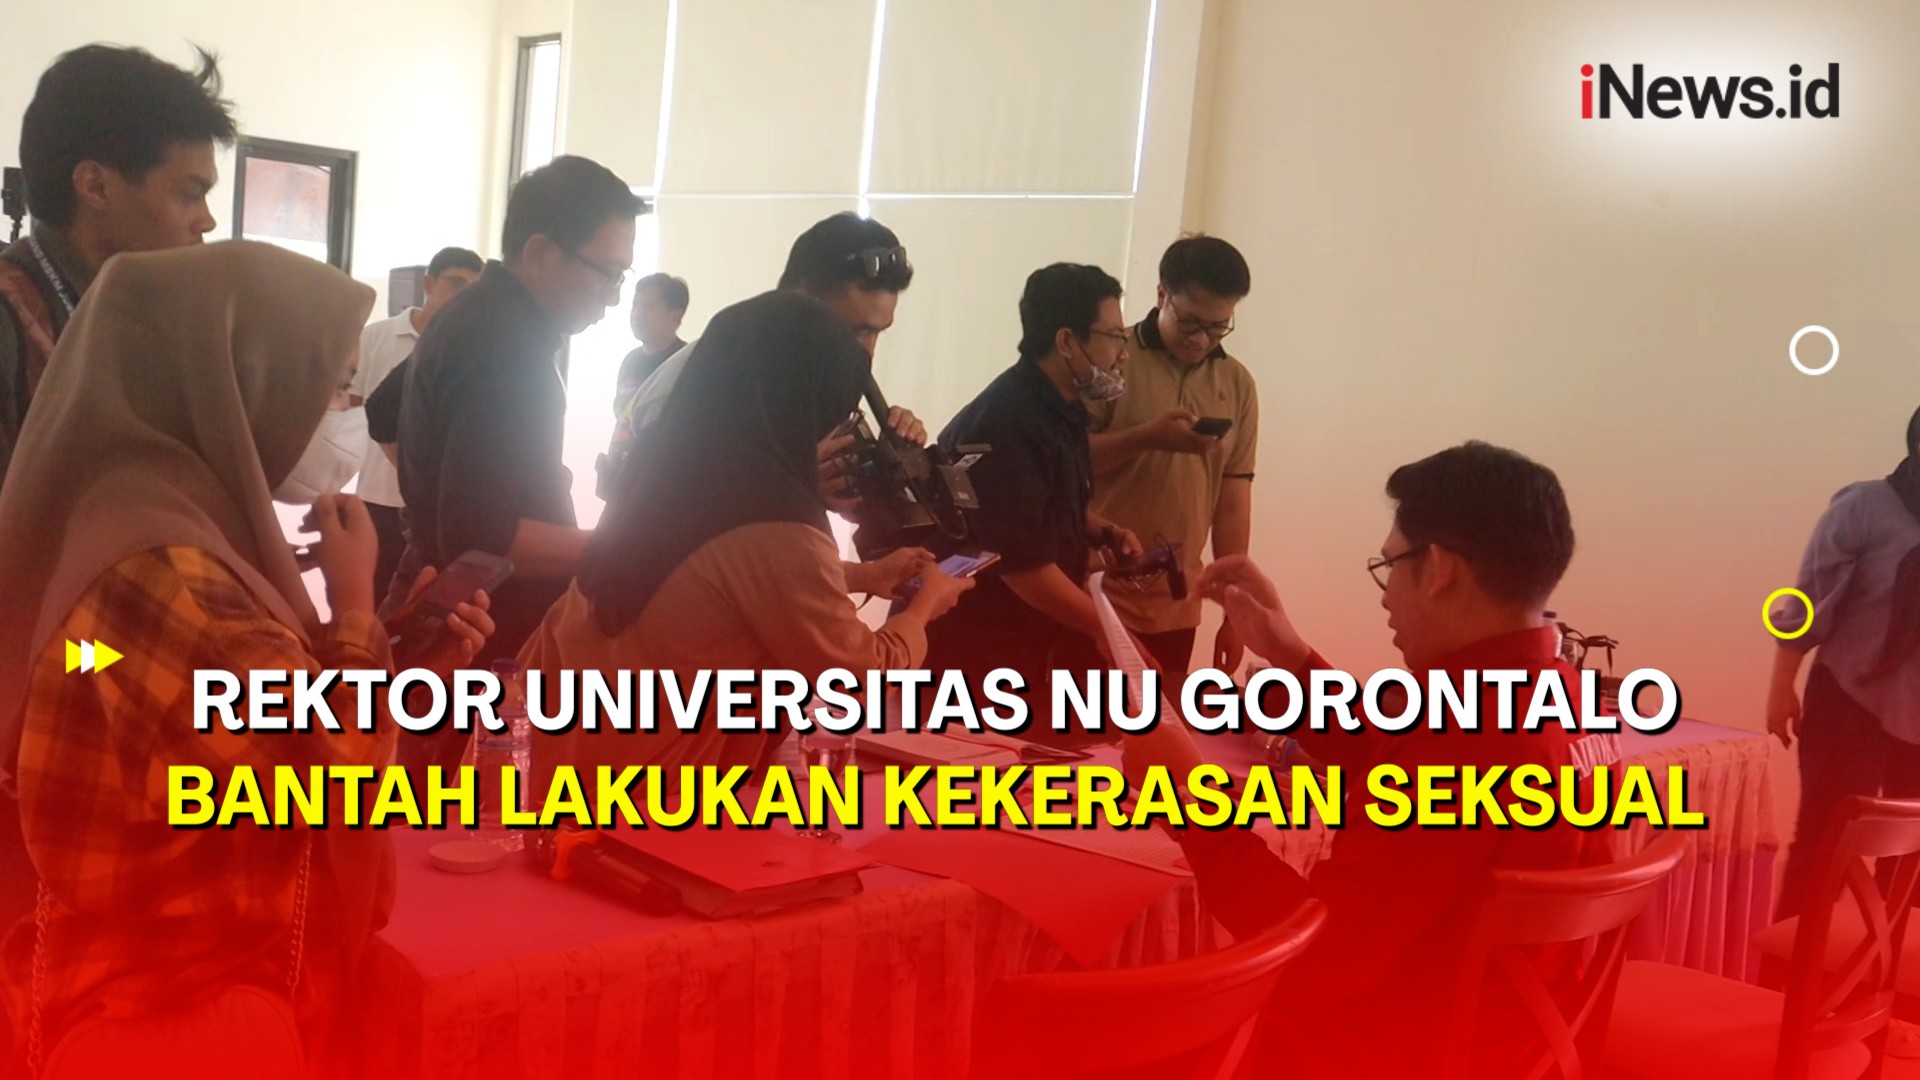 Rektor Universitas NU Gorontalo Bantah Tuduhan Pelecehan Seksual, Kuasa Hukum: Hanya Kesalahpahaman 